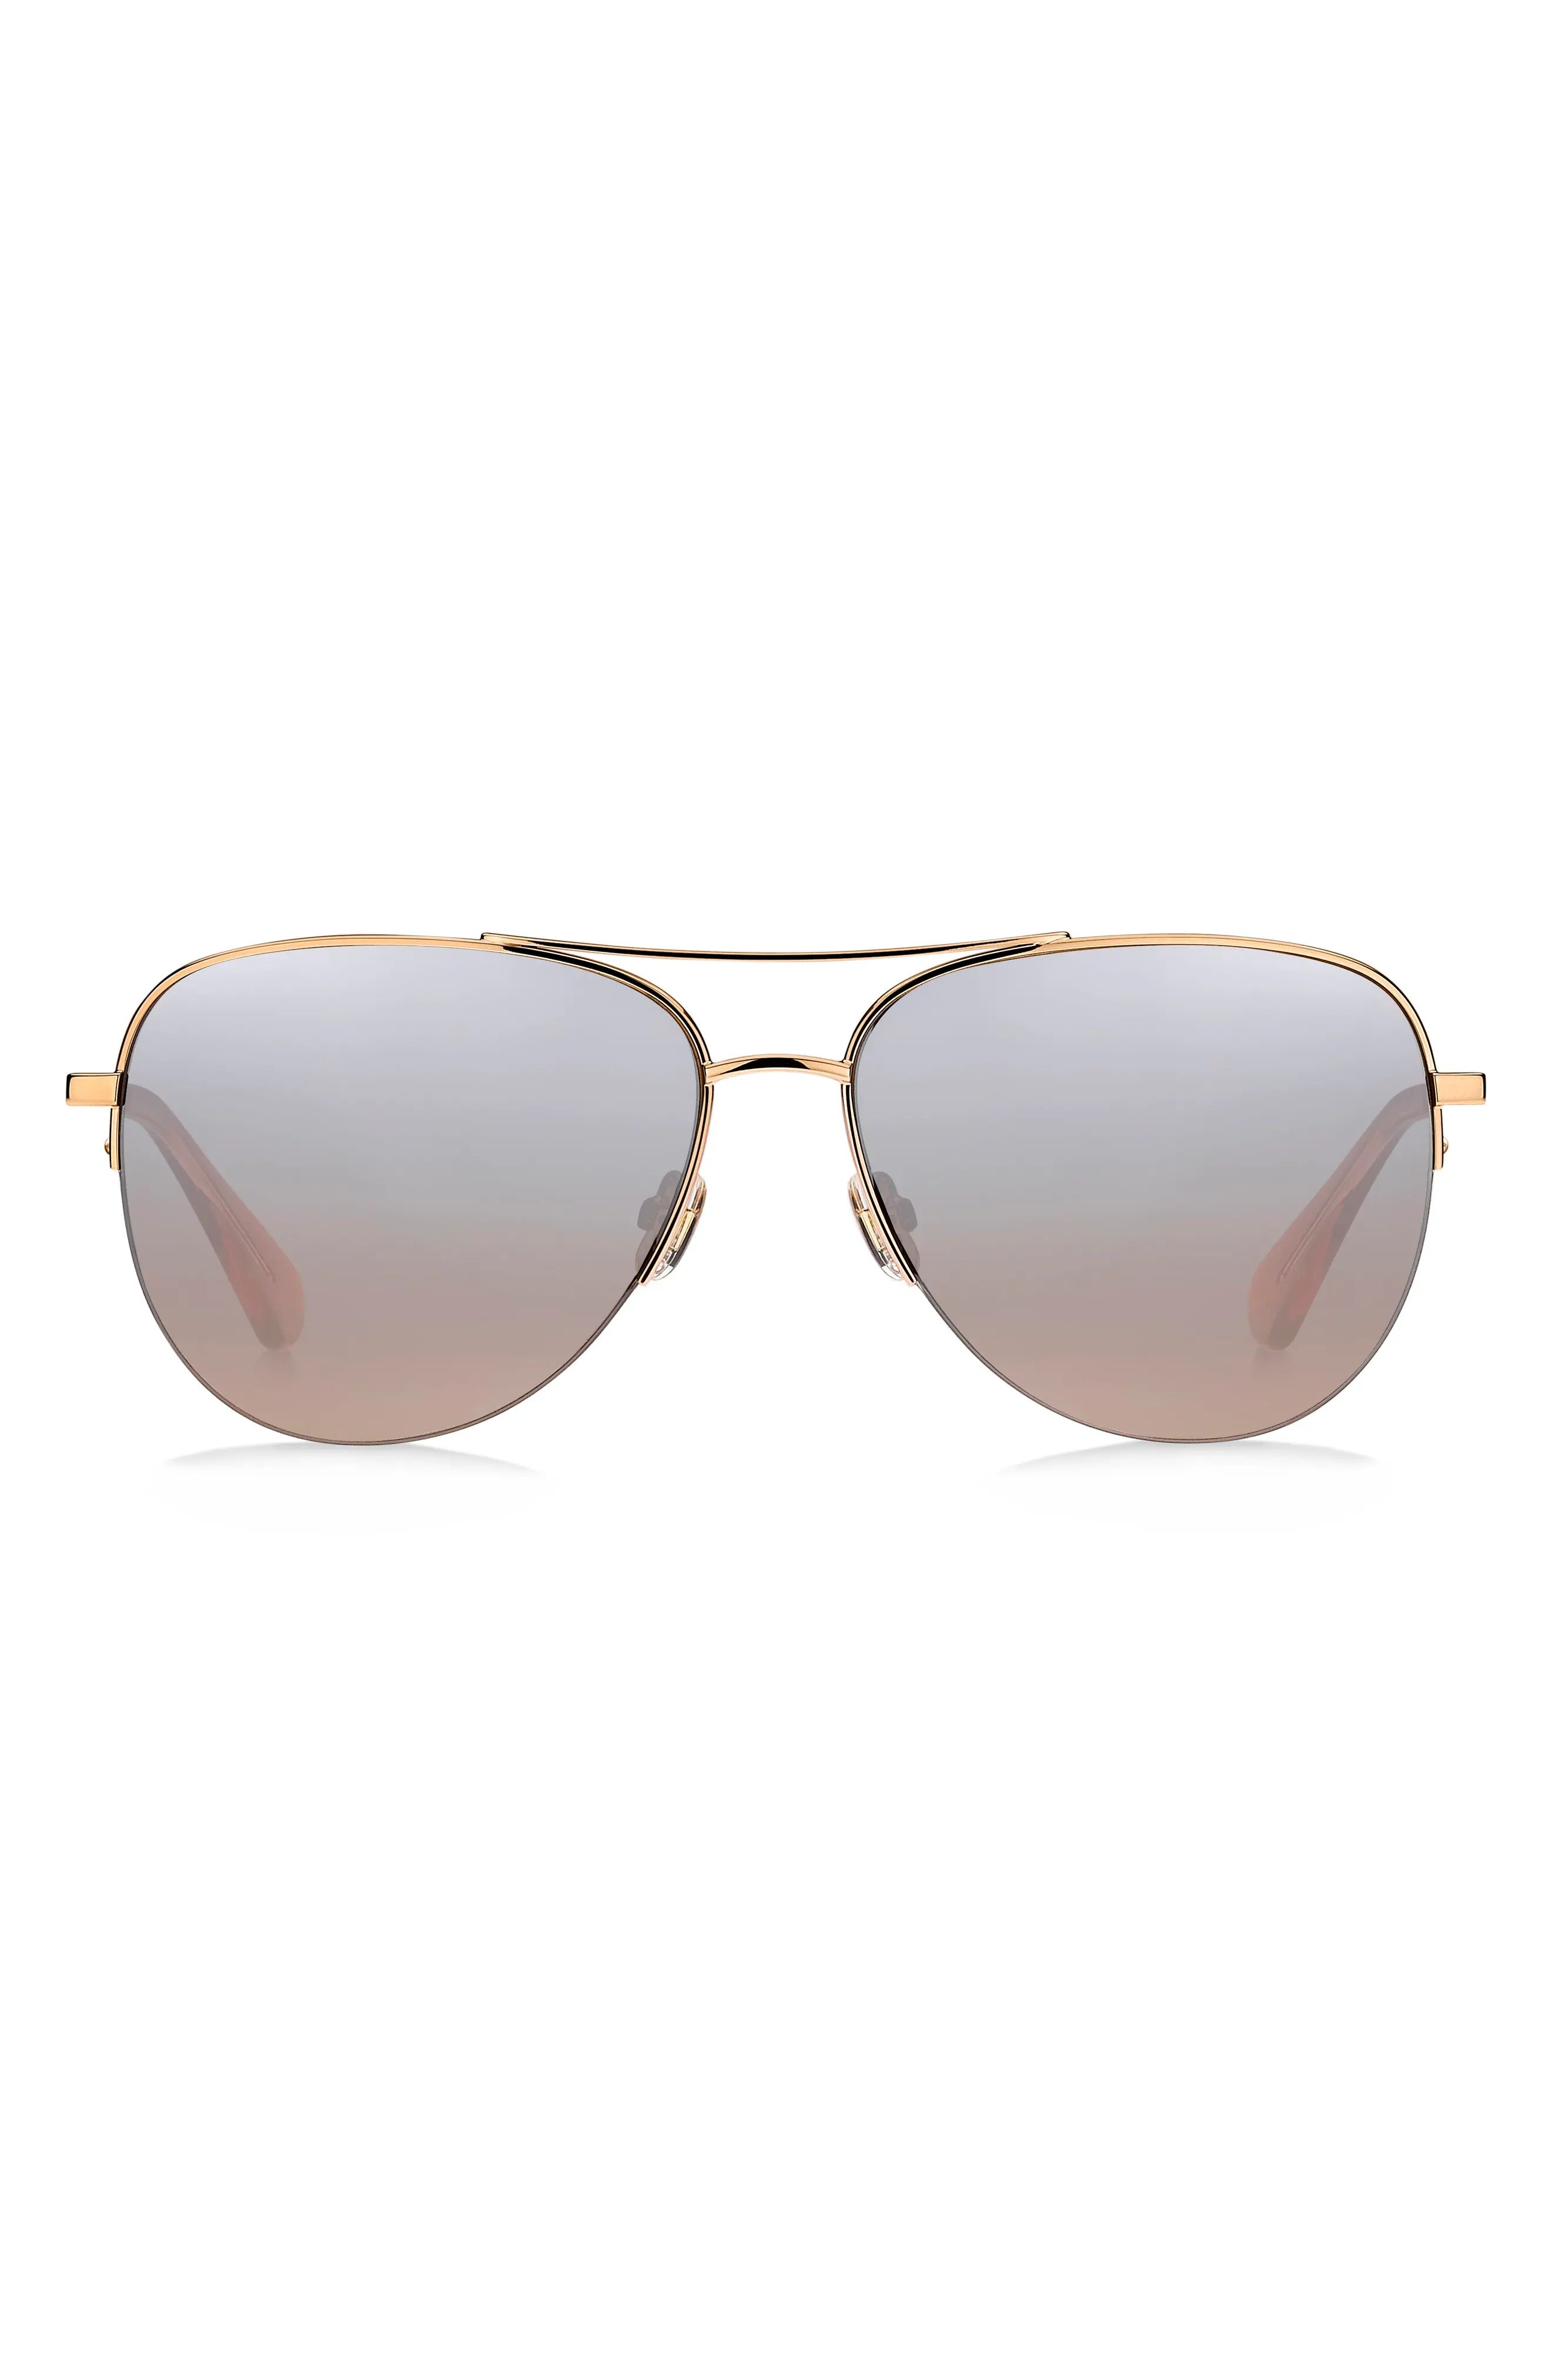 Women's Kate Spade New York Maisie 60mm Gradient Aviator Sunglasses - Pink/ Brown Mirror Gradient | Nordstrom